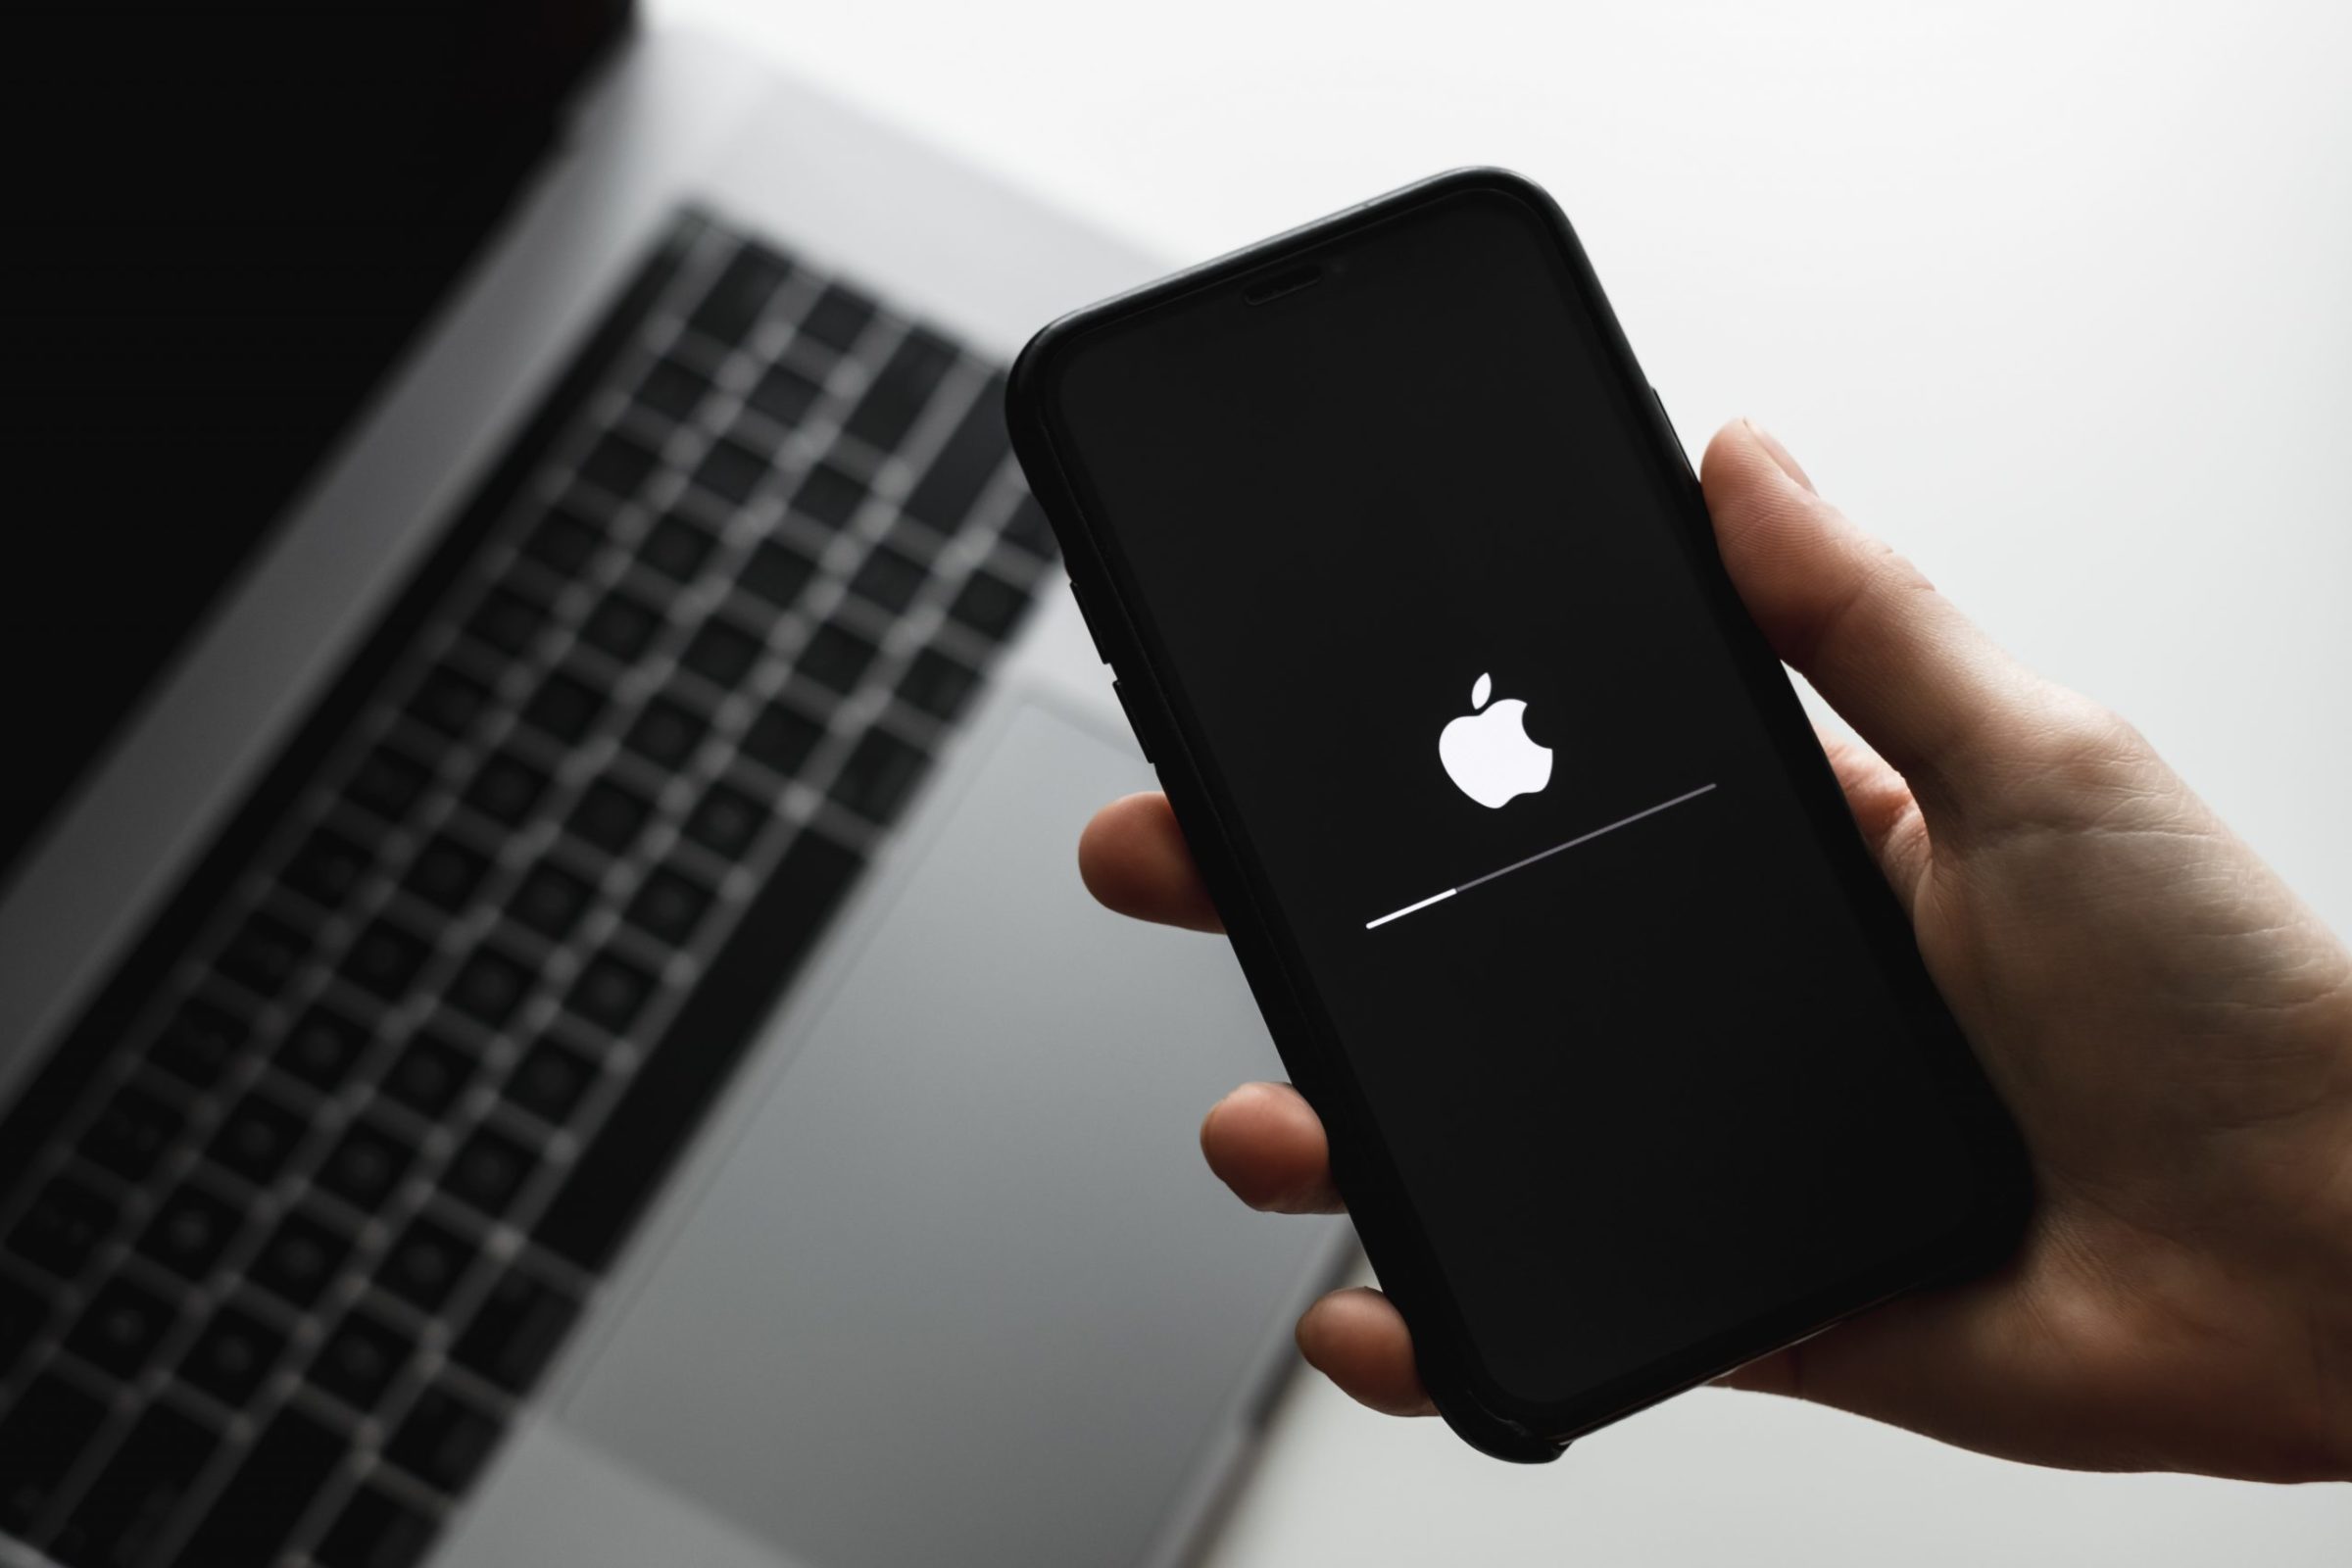 New Apple iPhone Update Causes Mass 9-1-1 Hangups